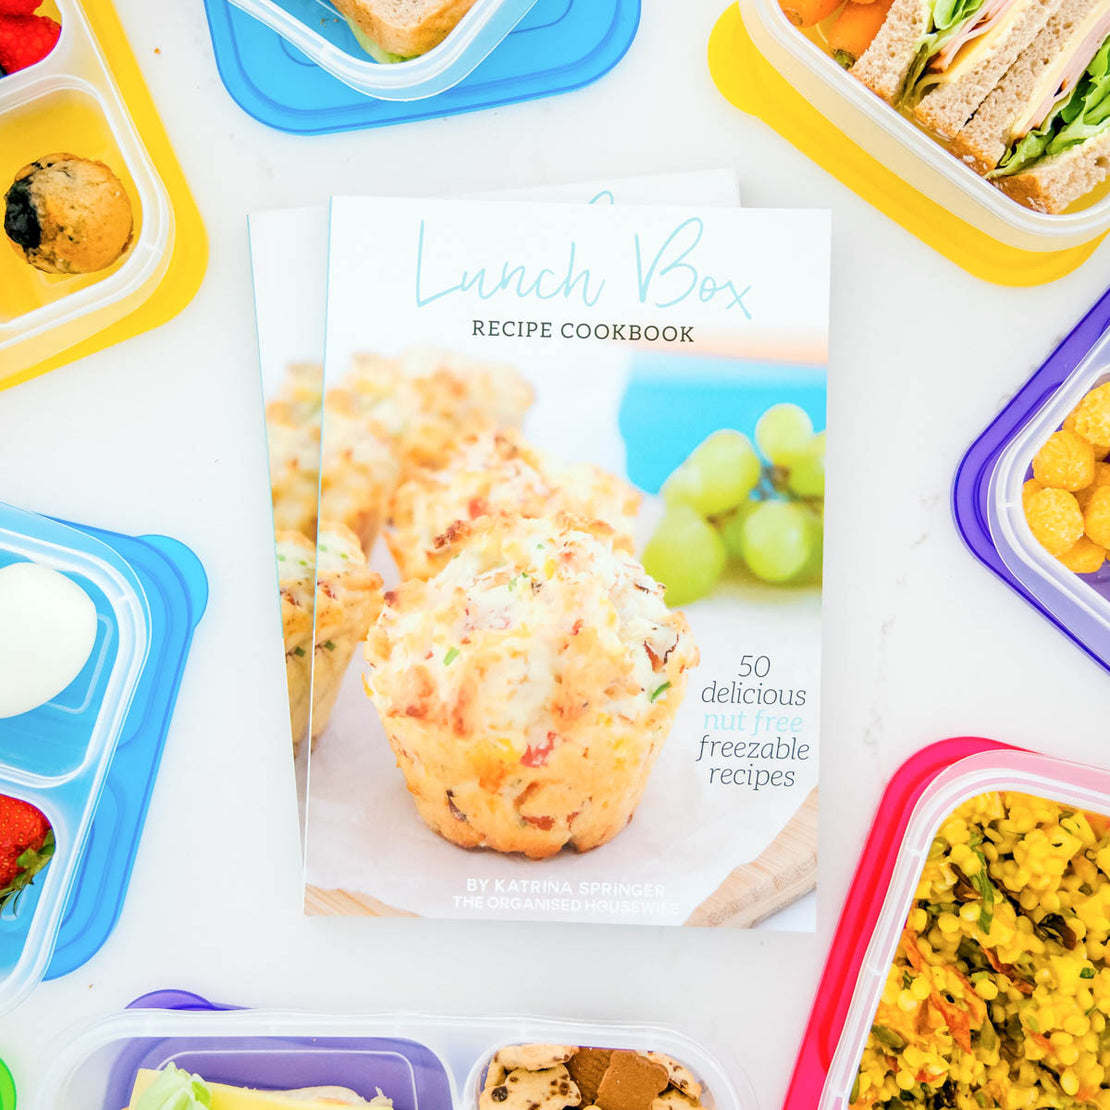 The 20 Best Freezer Friendly Lunchbox Items - Kidgredients